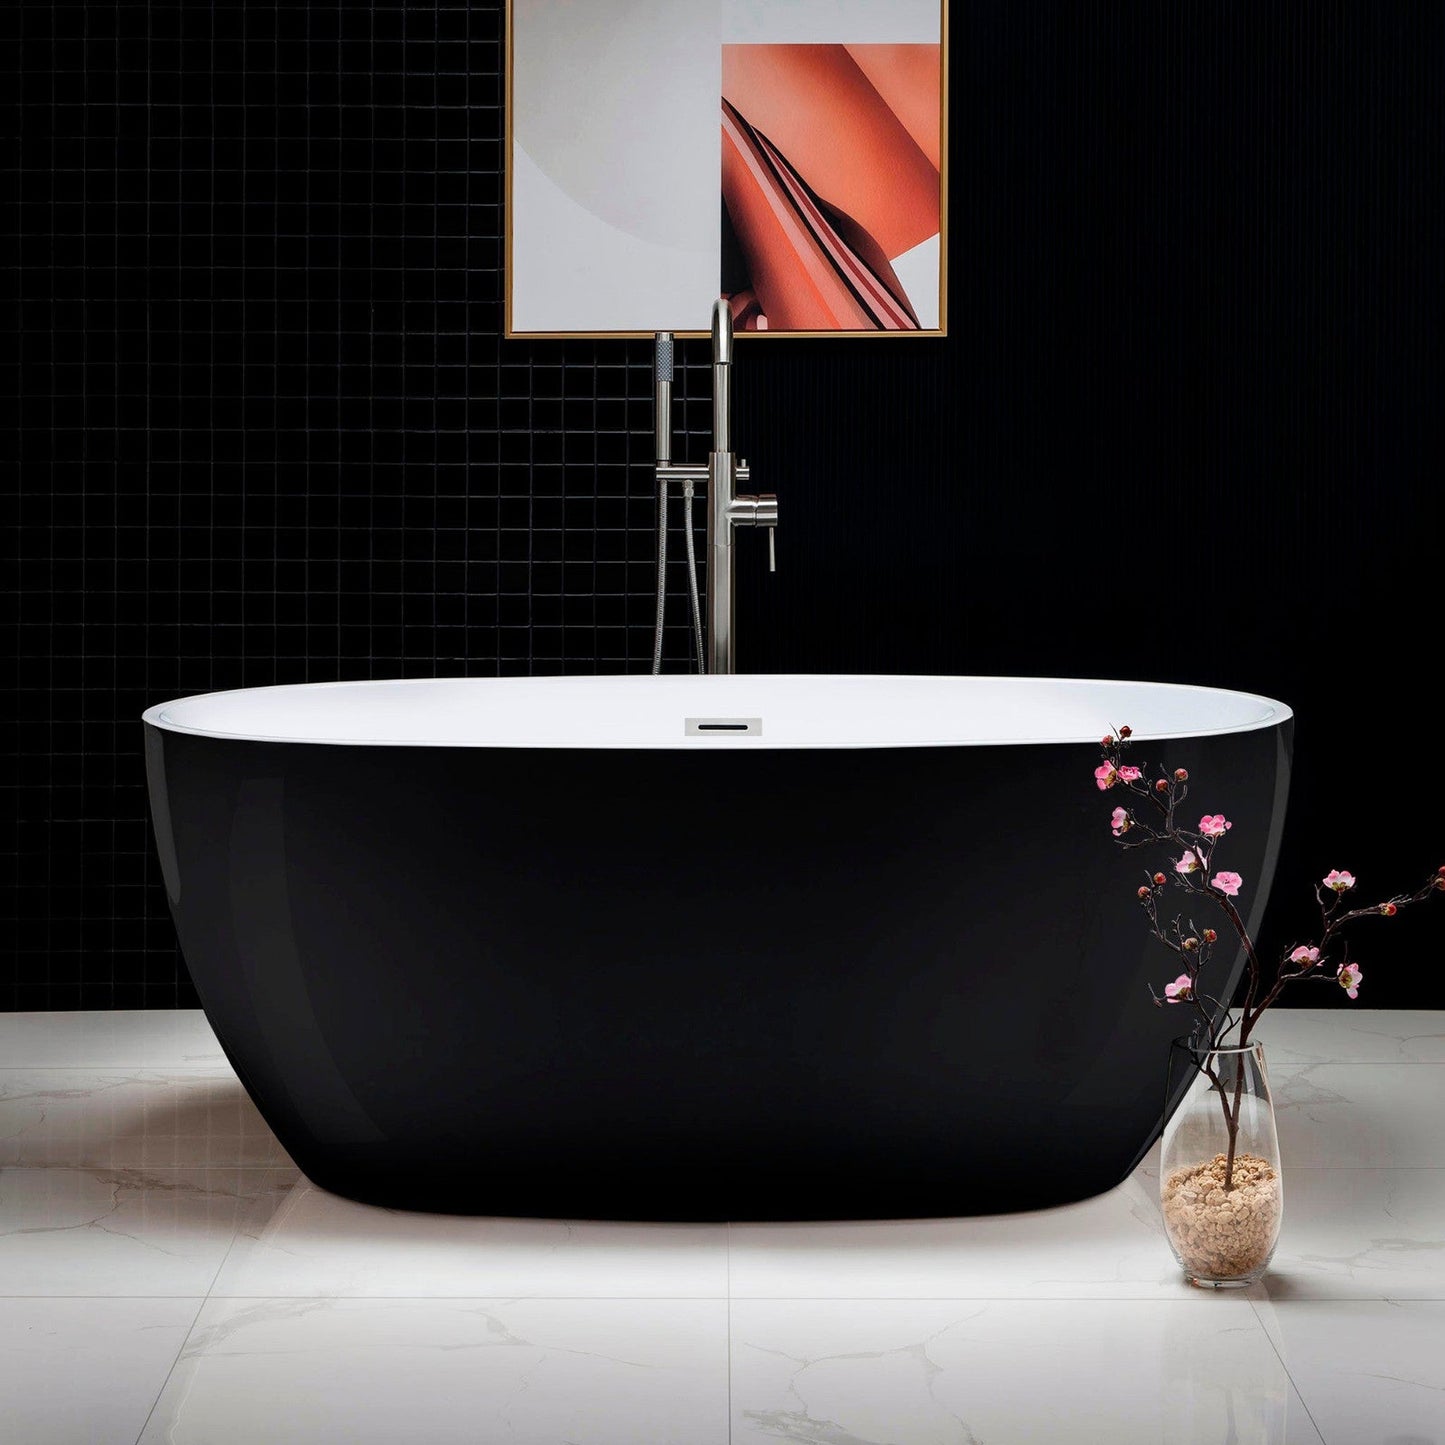 WoodBridge B1818 59" Black Acrylic Freestanding Soaking Bathtub With Brushed Nickel Drain, Overflow, F0070BNVT Tub Filler and Caddy Tray